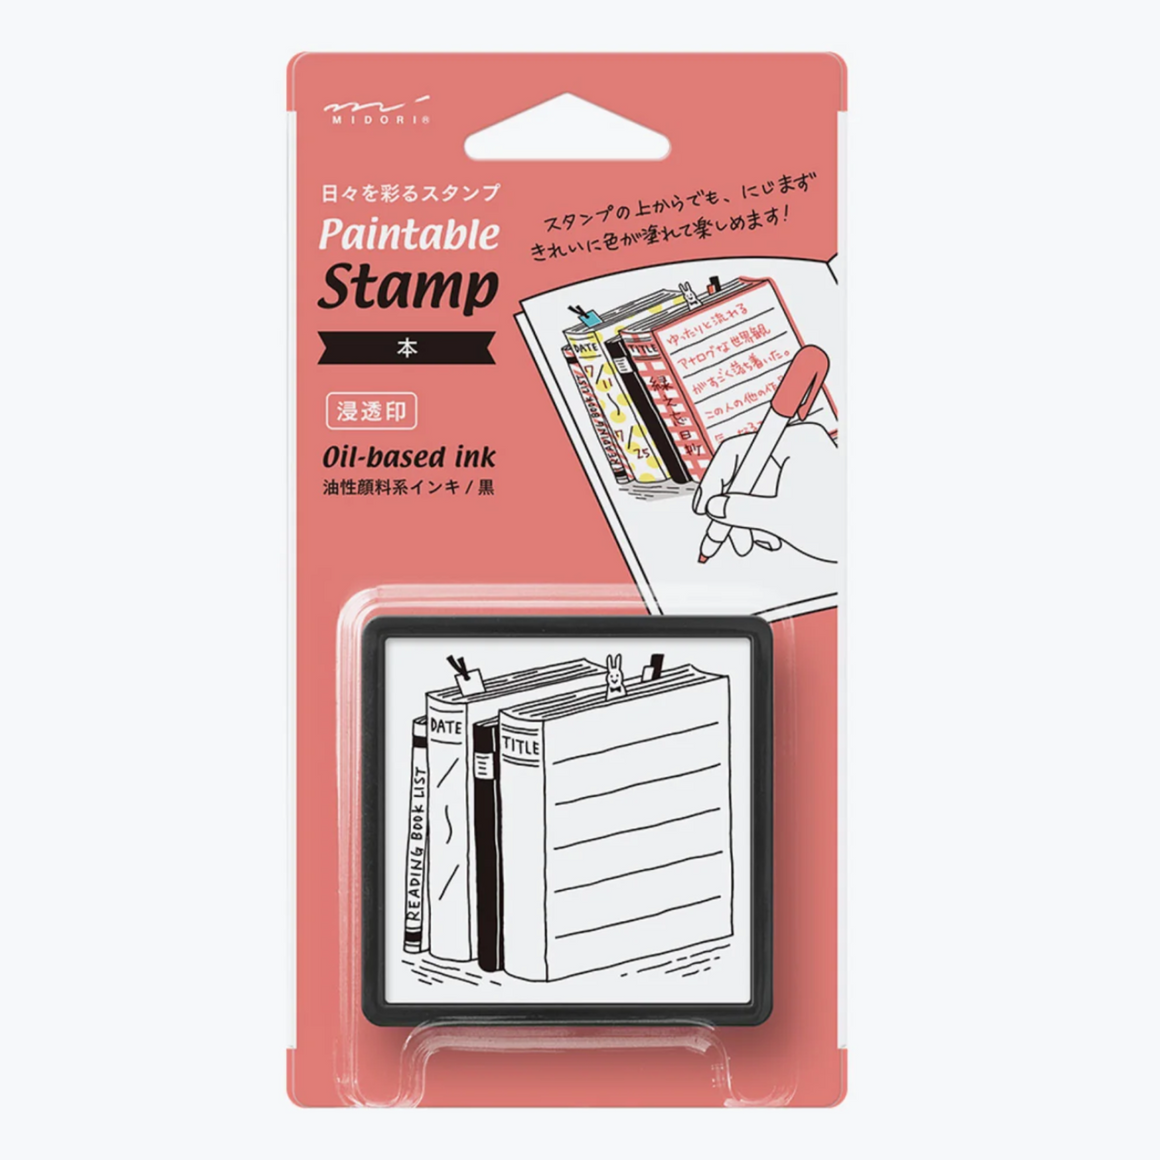 Self-Inking Stamp - Books